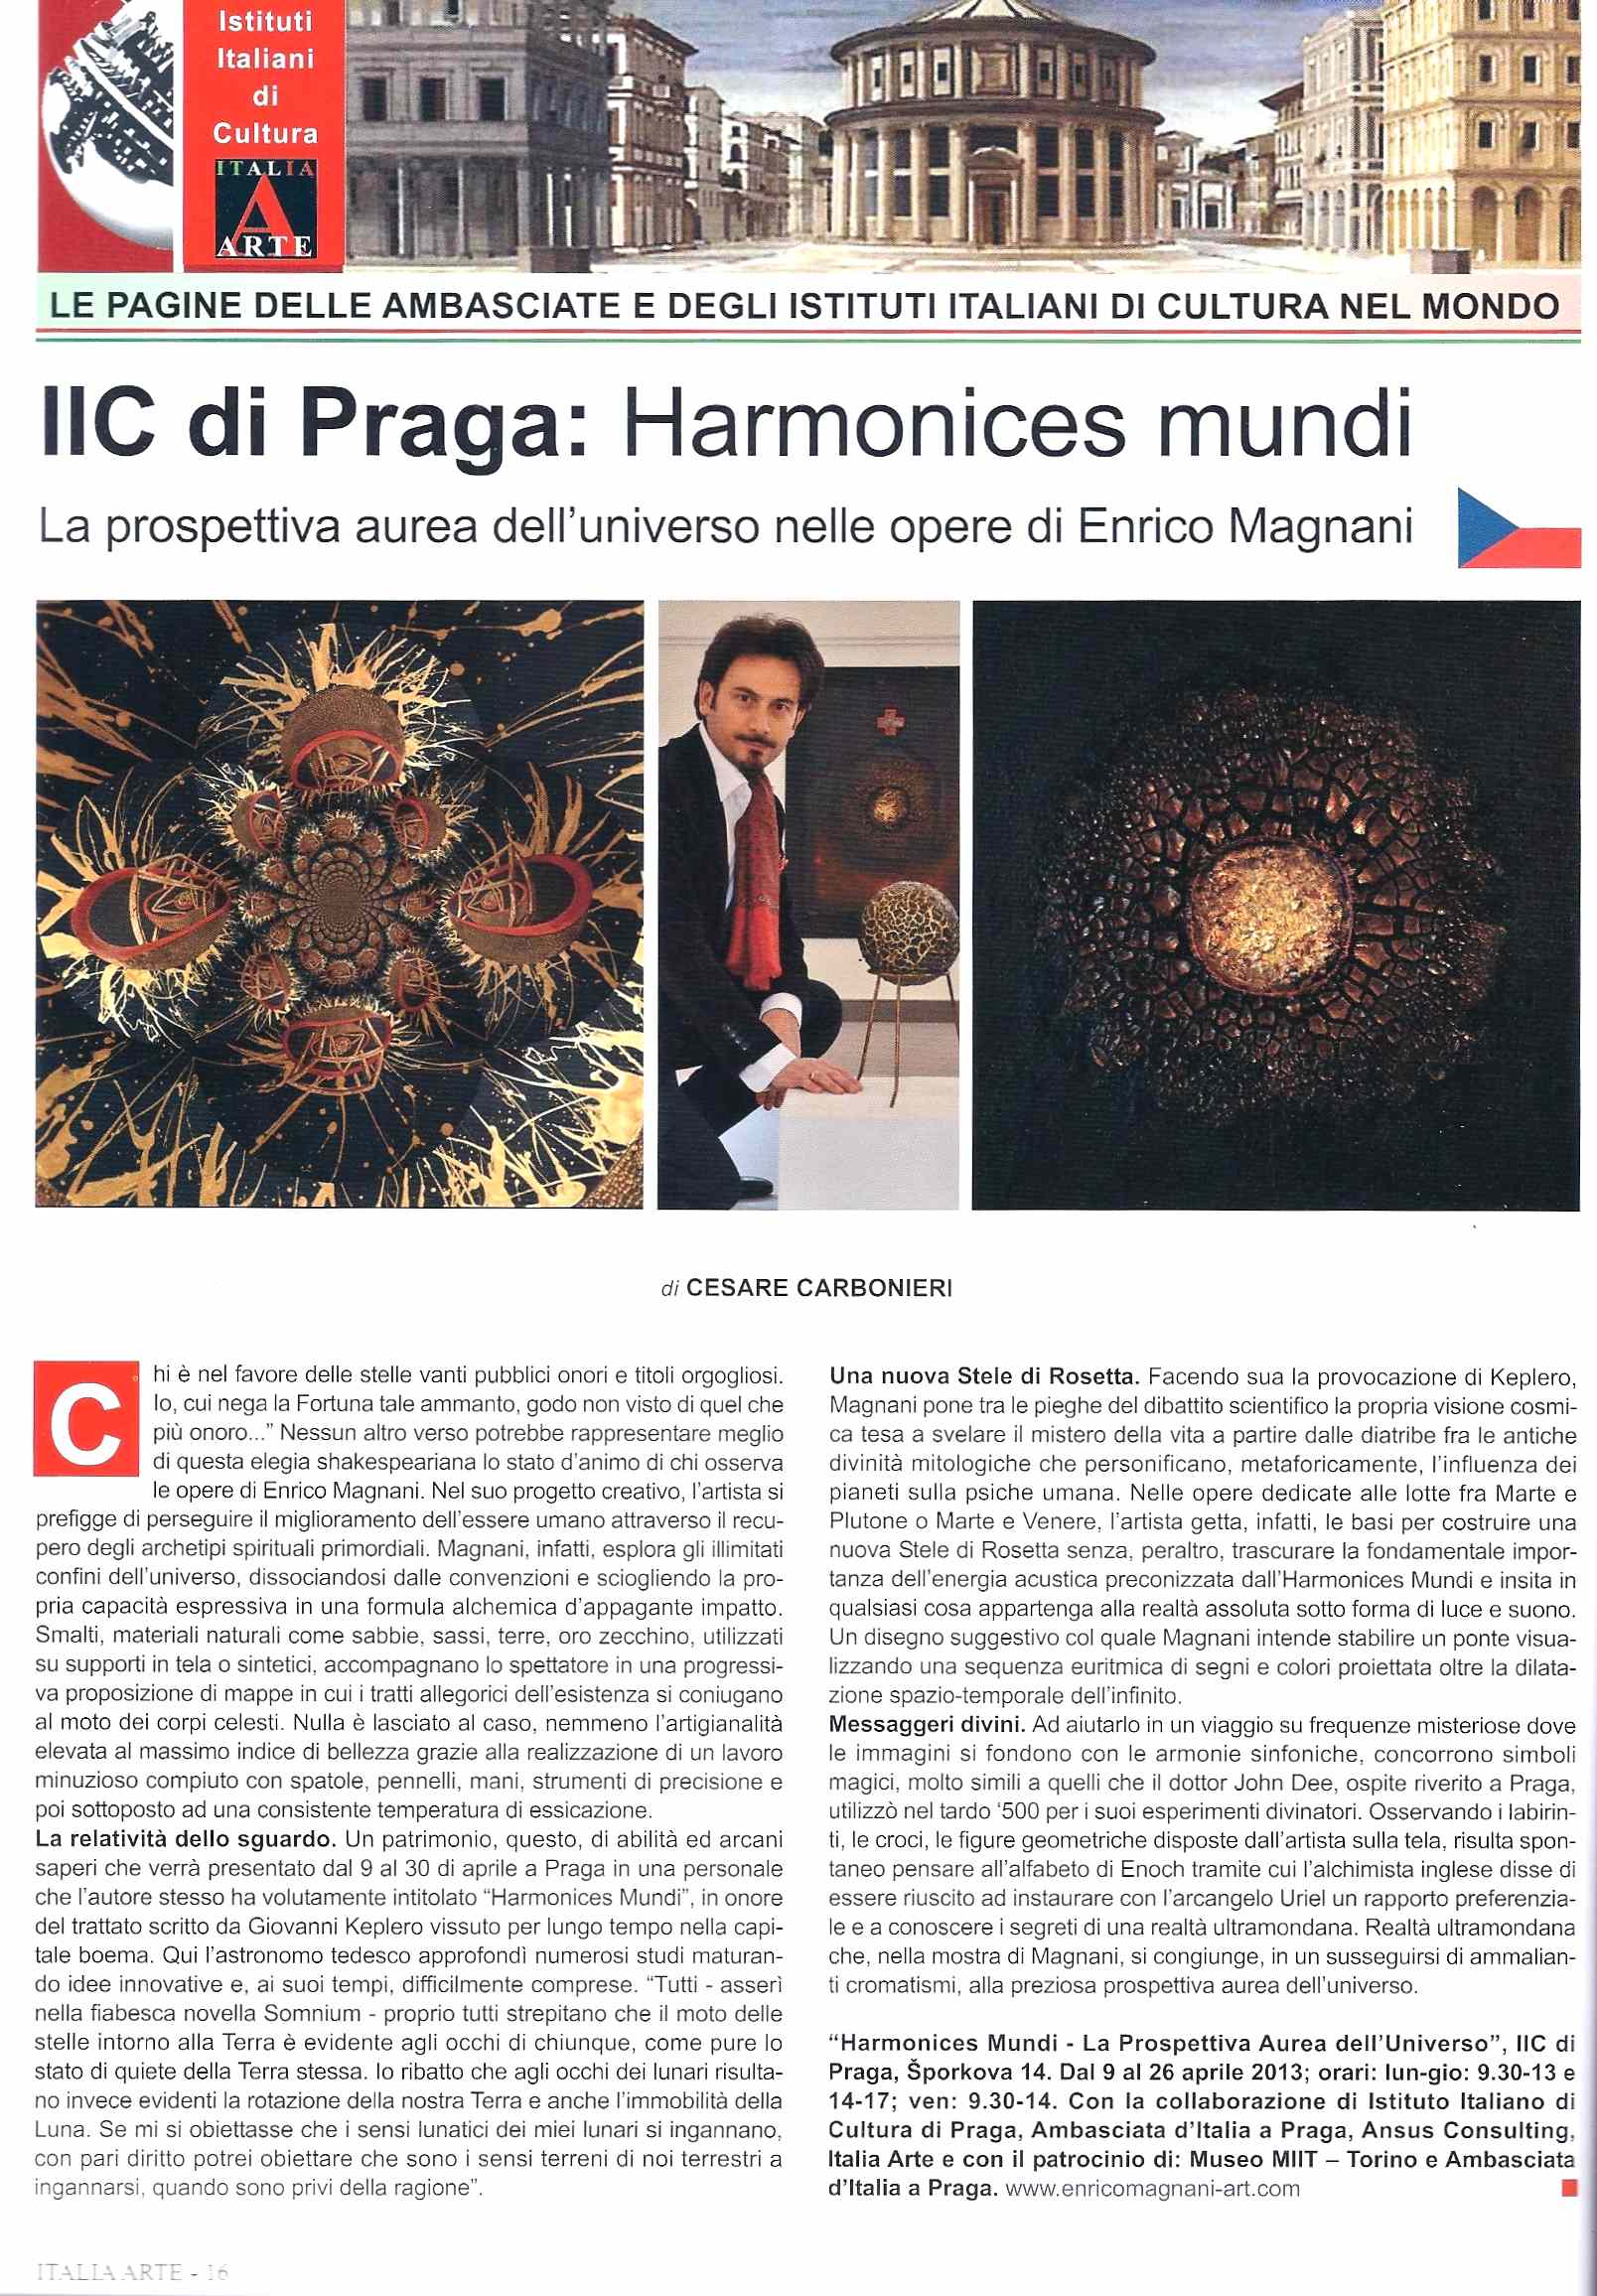 Enrico Magnani, italia arte, praga, harmonices mundi